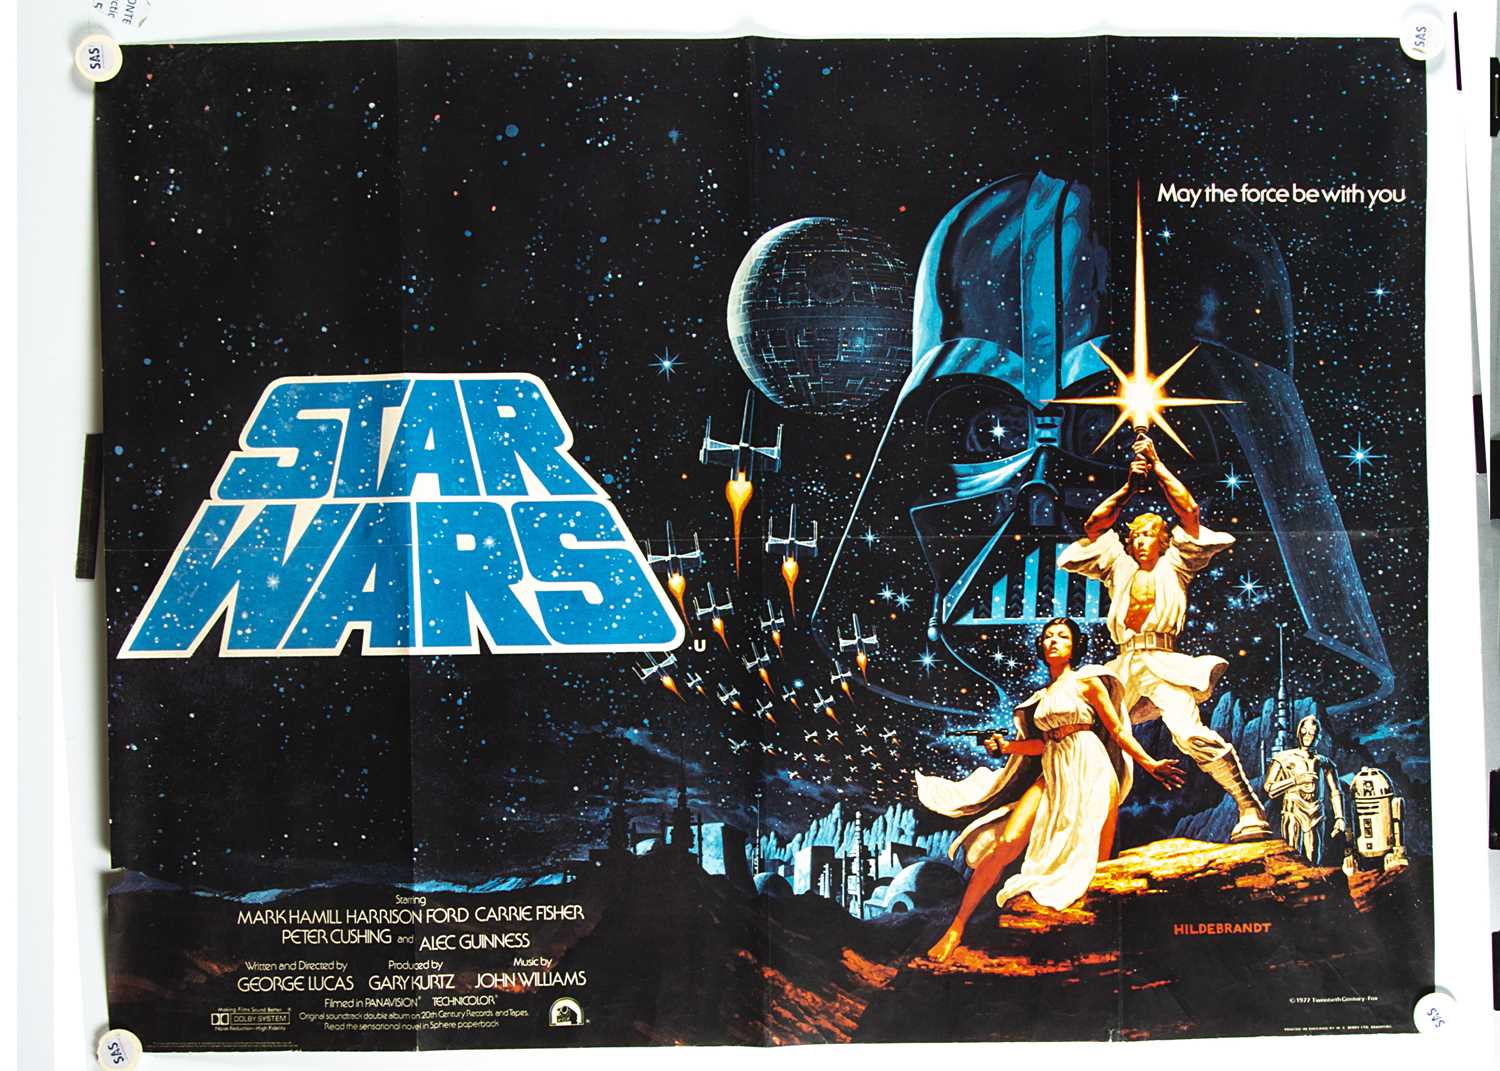 Lot 430 - Star Wars (1977) UK Quad poster